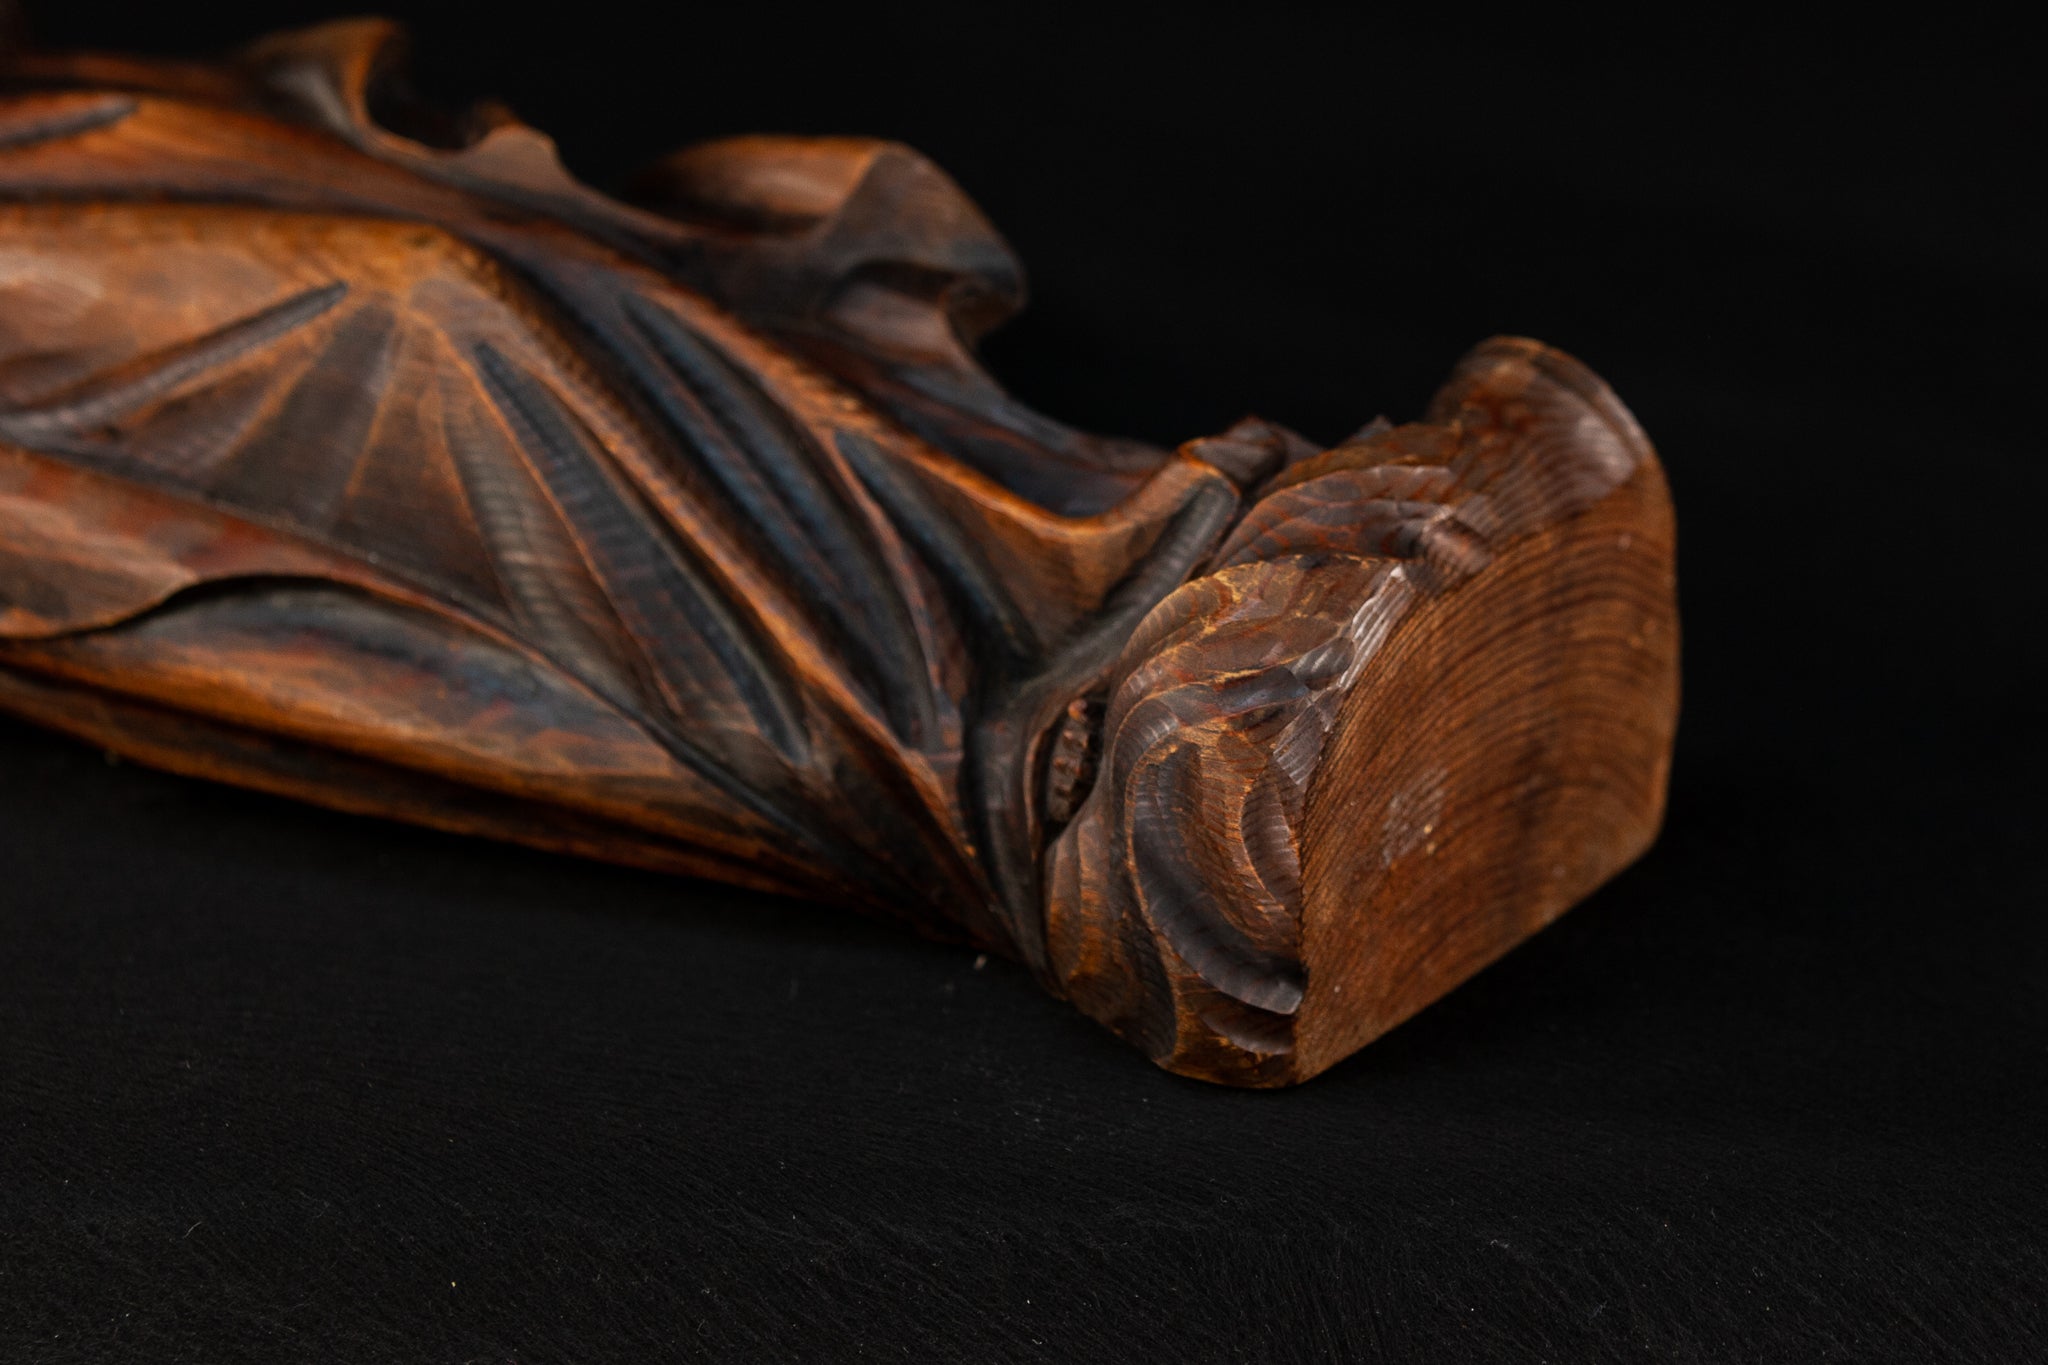 Virgin Mary Child Jesus Wooden Sculpture 22” / 56 cm